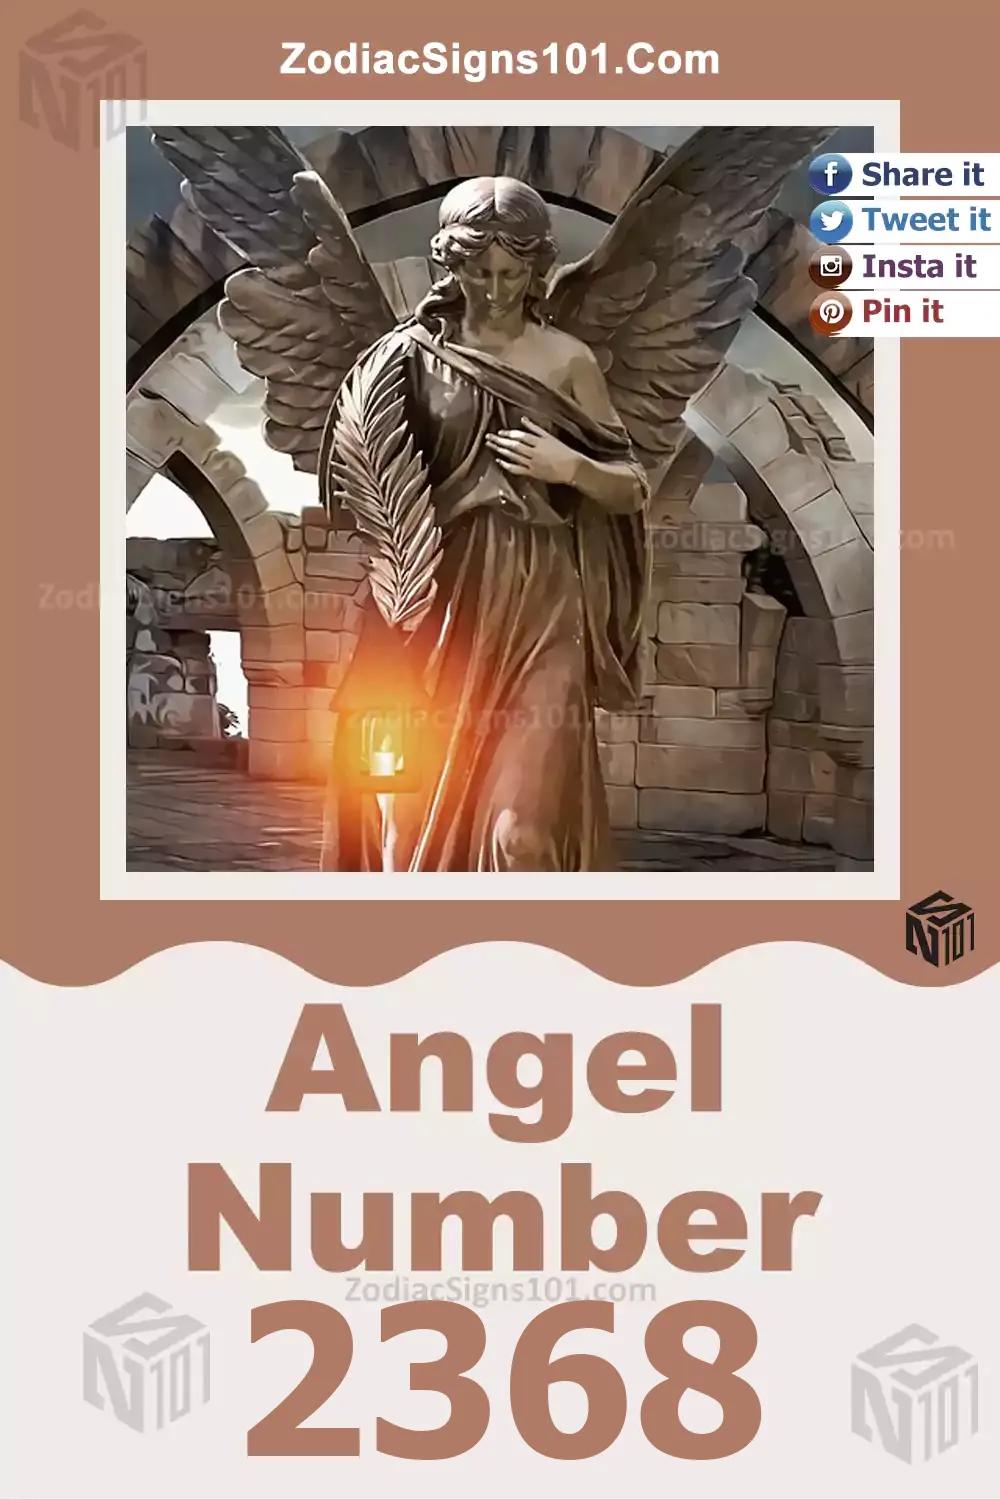 2368-Angel-Number-Meaning.jpg